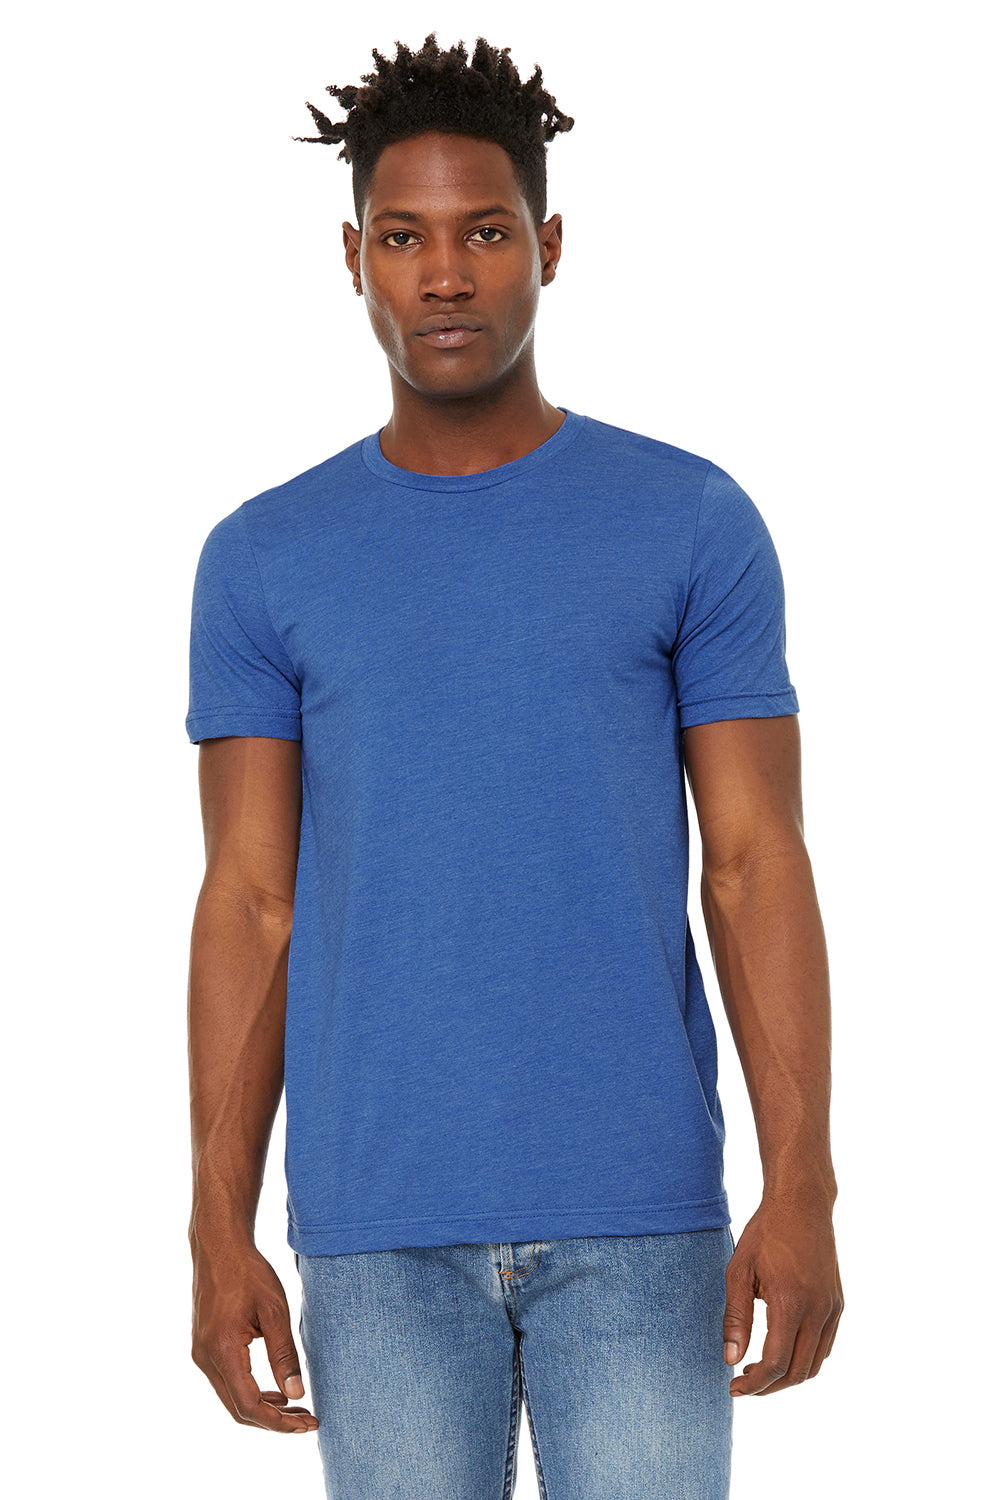 Bella + Canvas BC3301 Jersey Short Sleeve Crewneck T-Shirt Heather Royal Blue Front